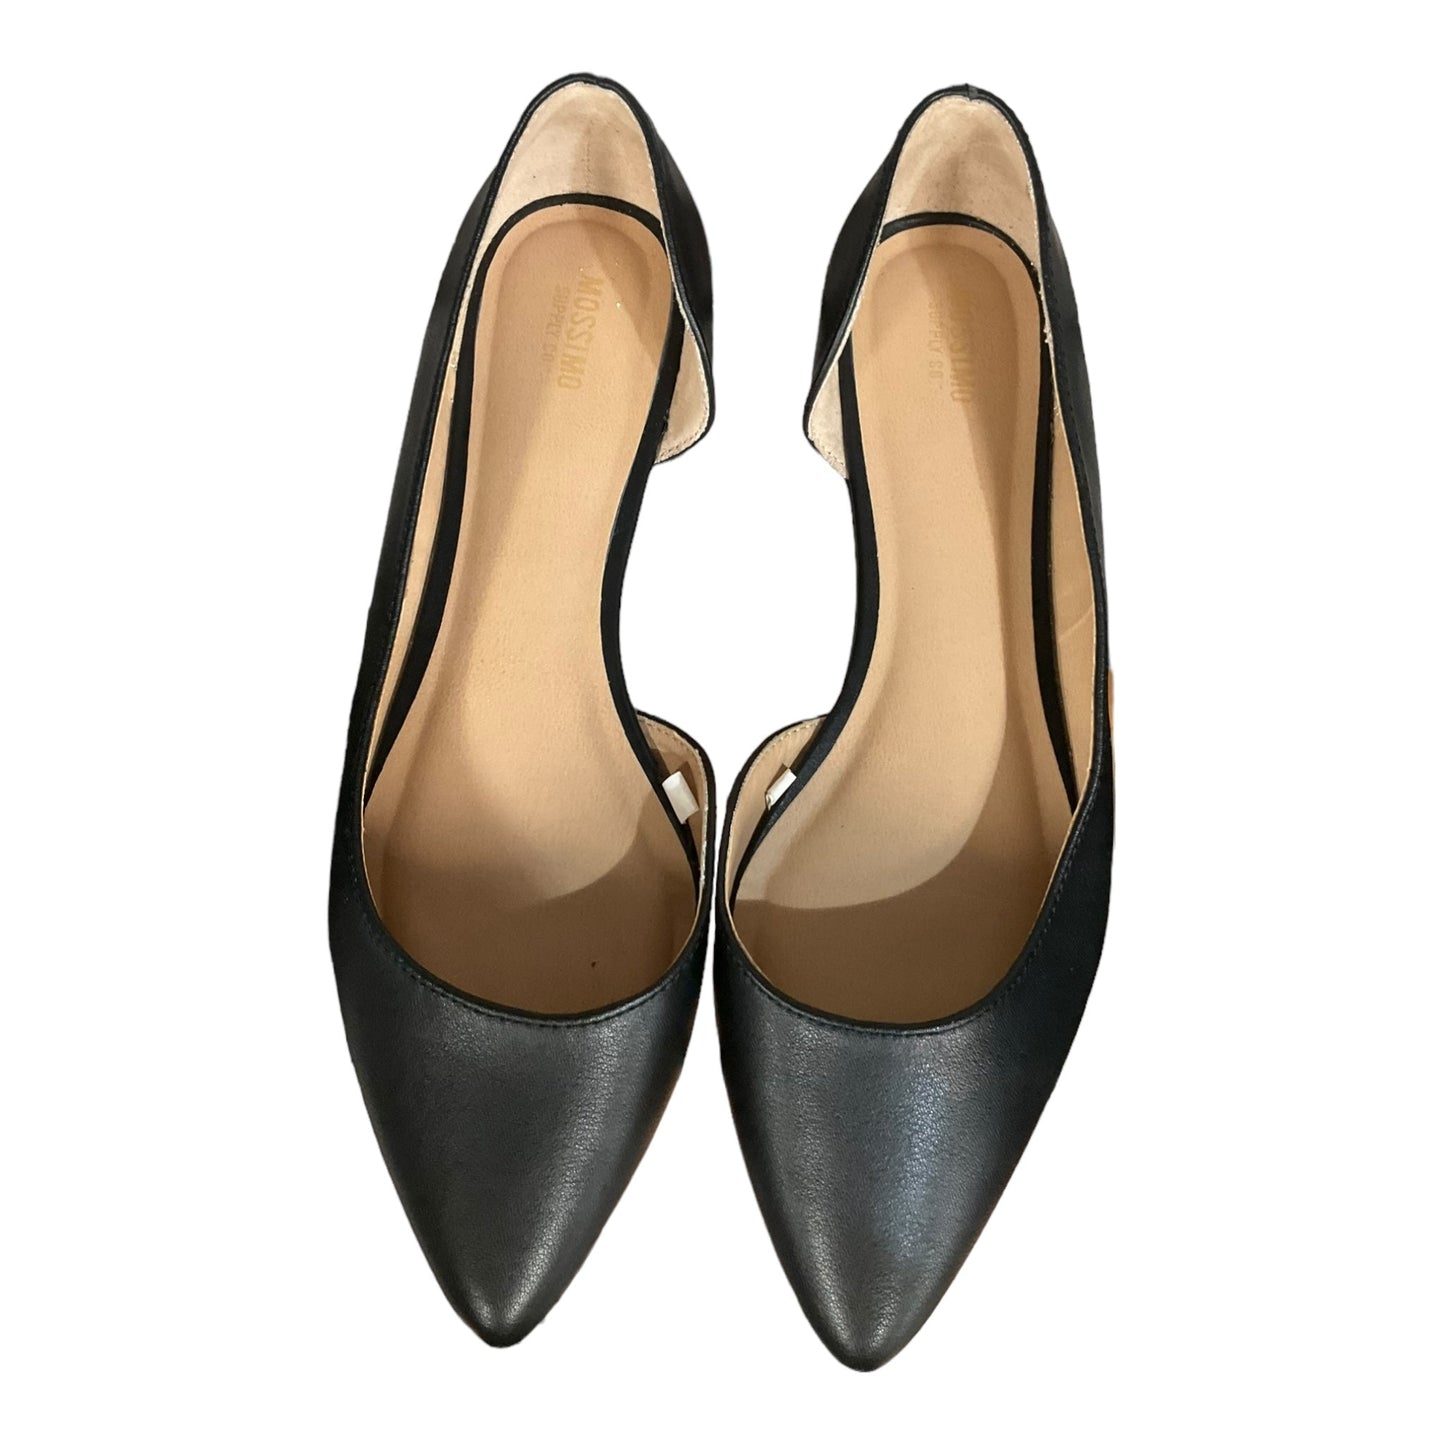 Black Shoes Flats Mossimo, Size 8.5